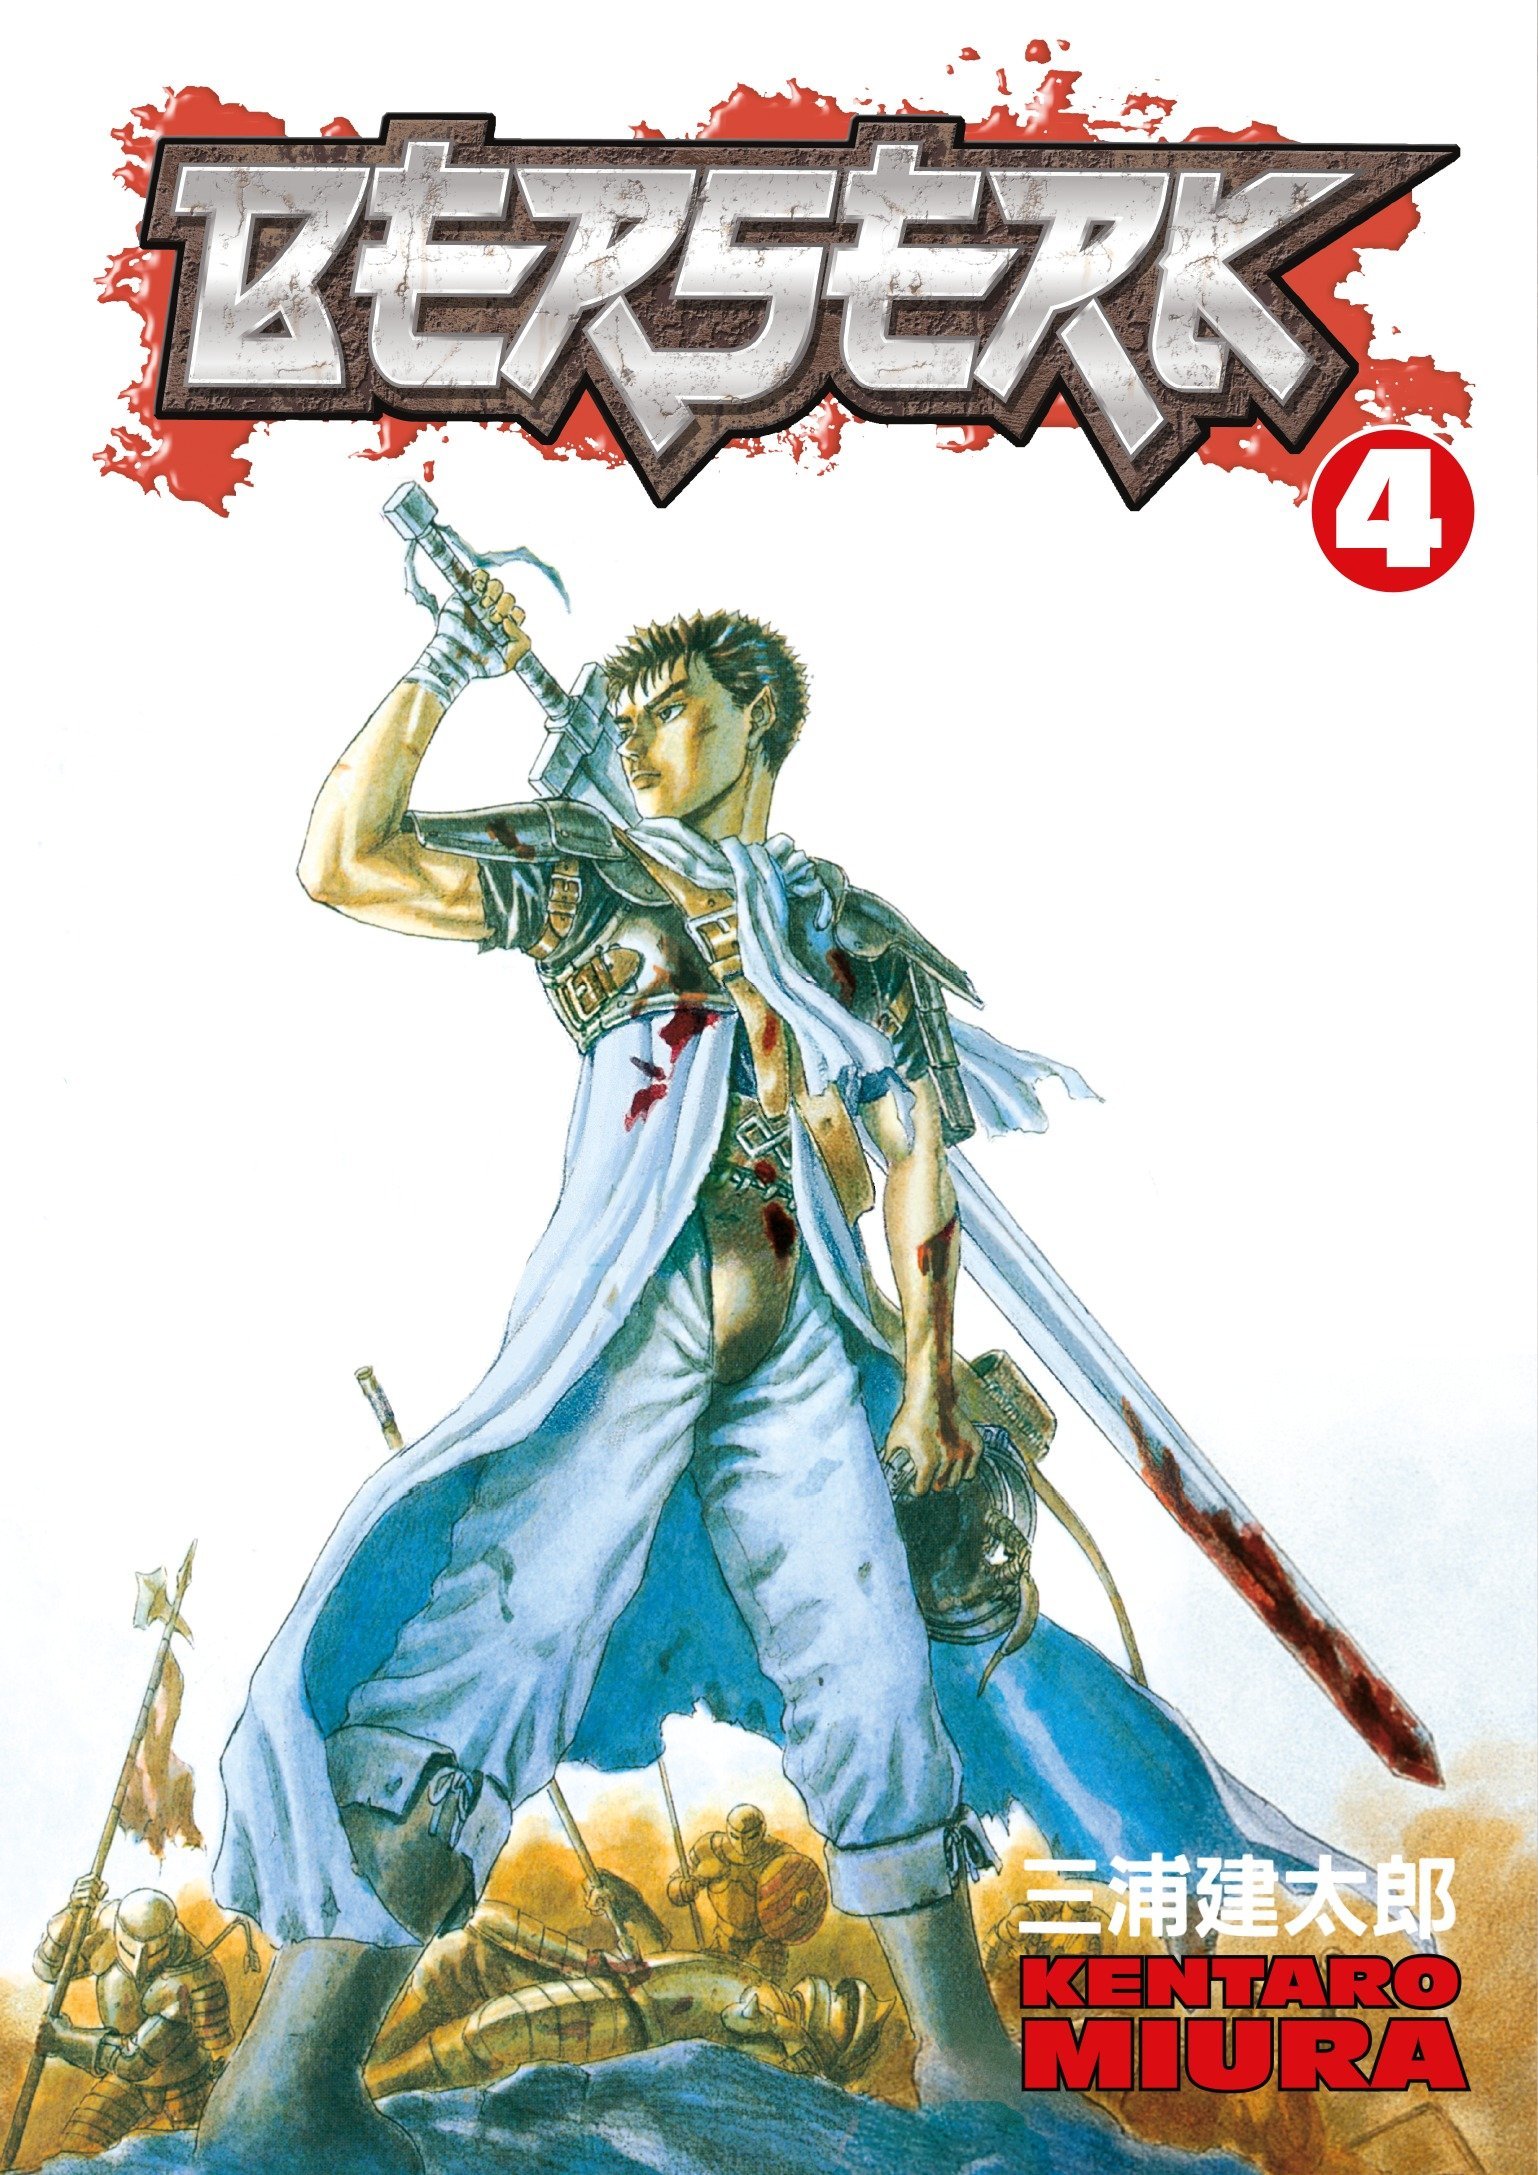 Berserk - Volume 4 | Kentaro Miura